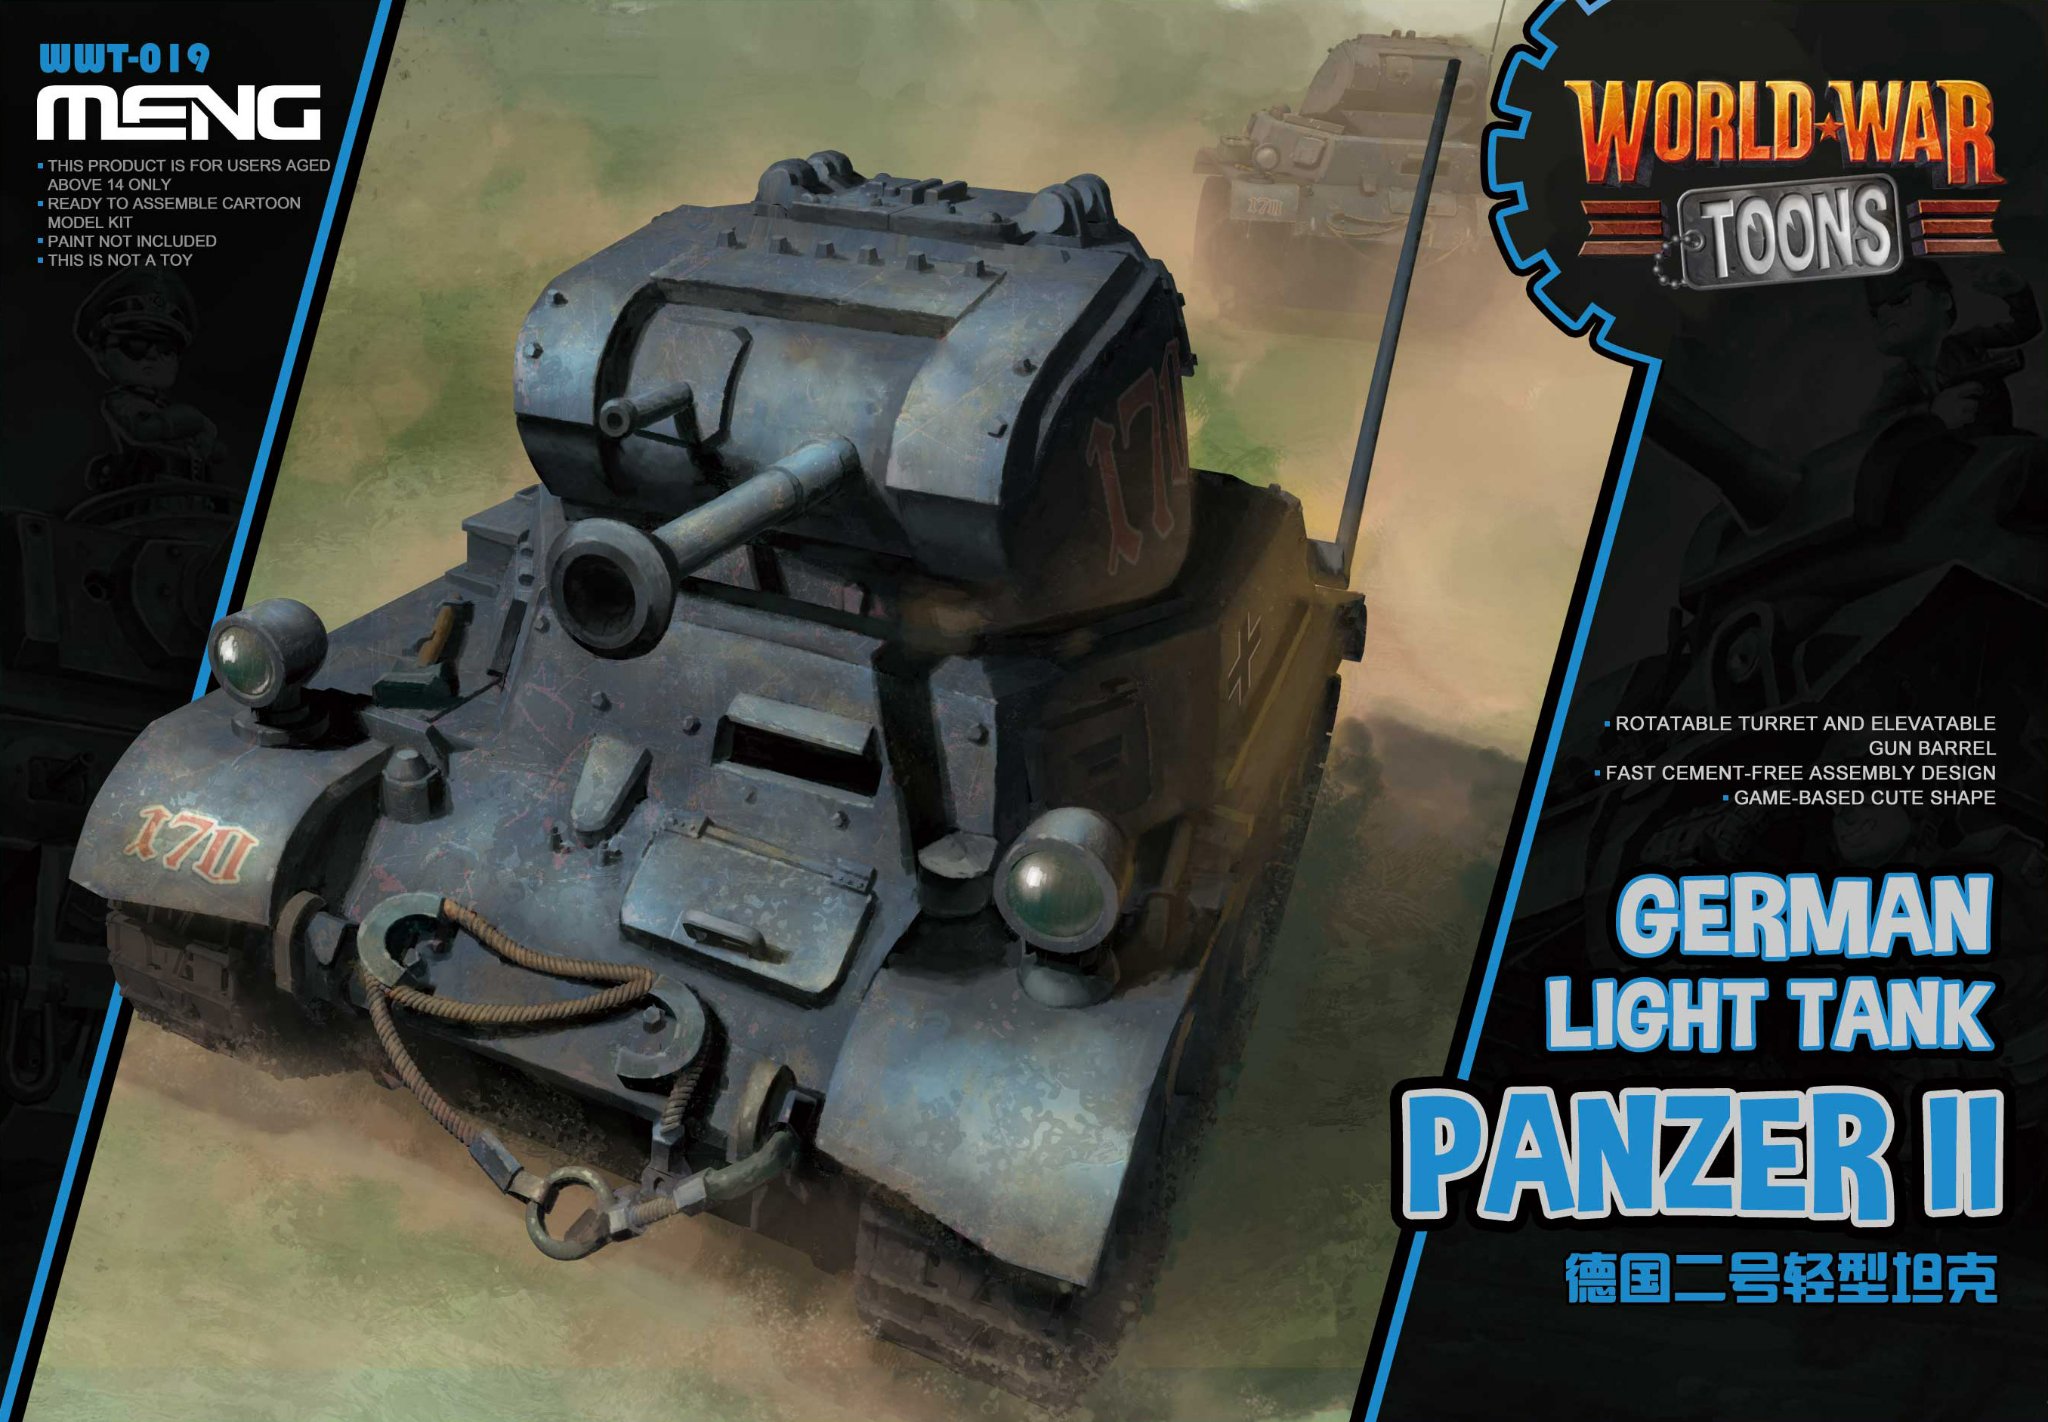 WWT-019  техника и вооружение  World War Toons Panzer II German Light Tank